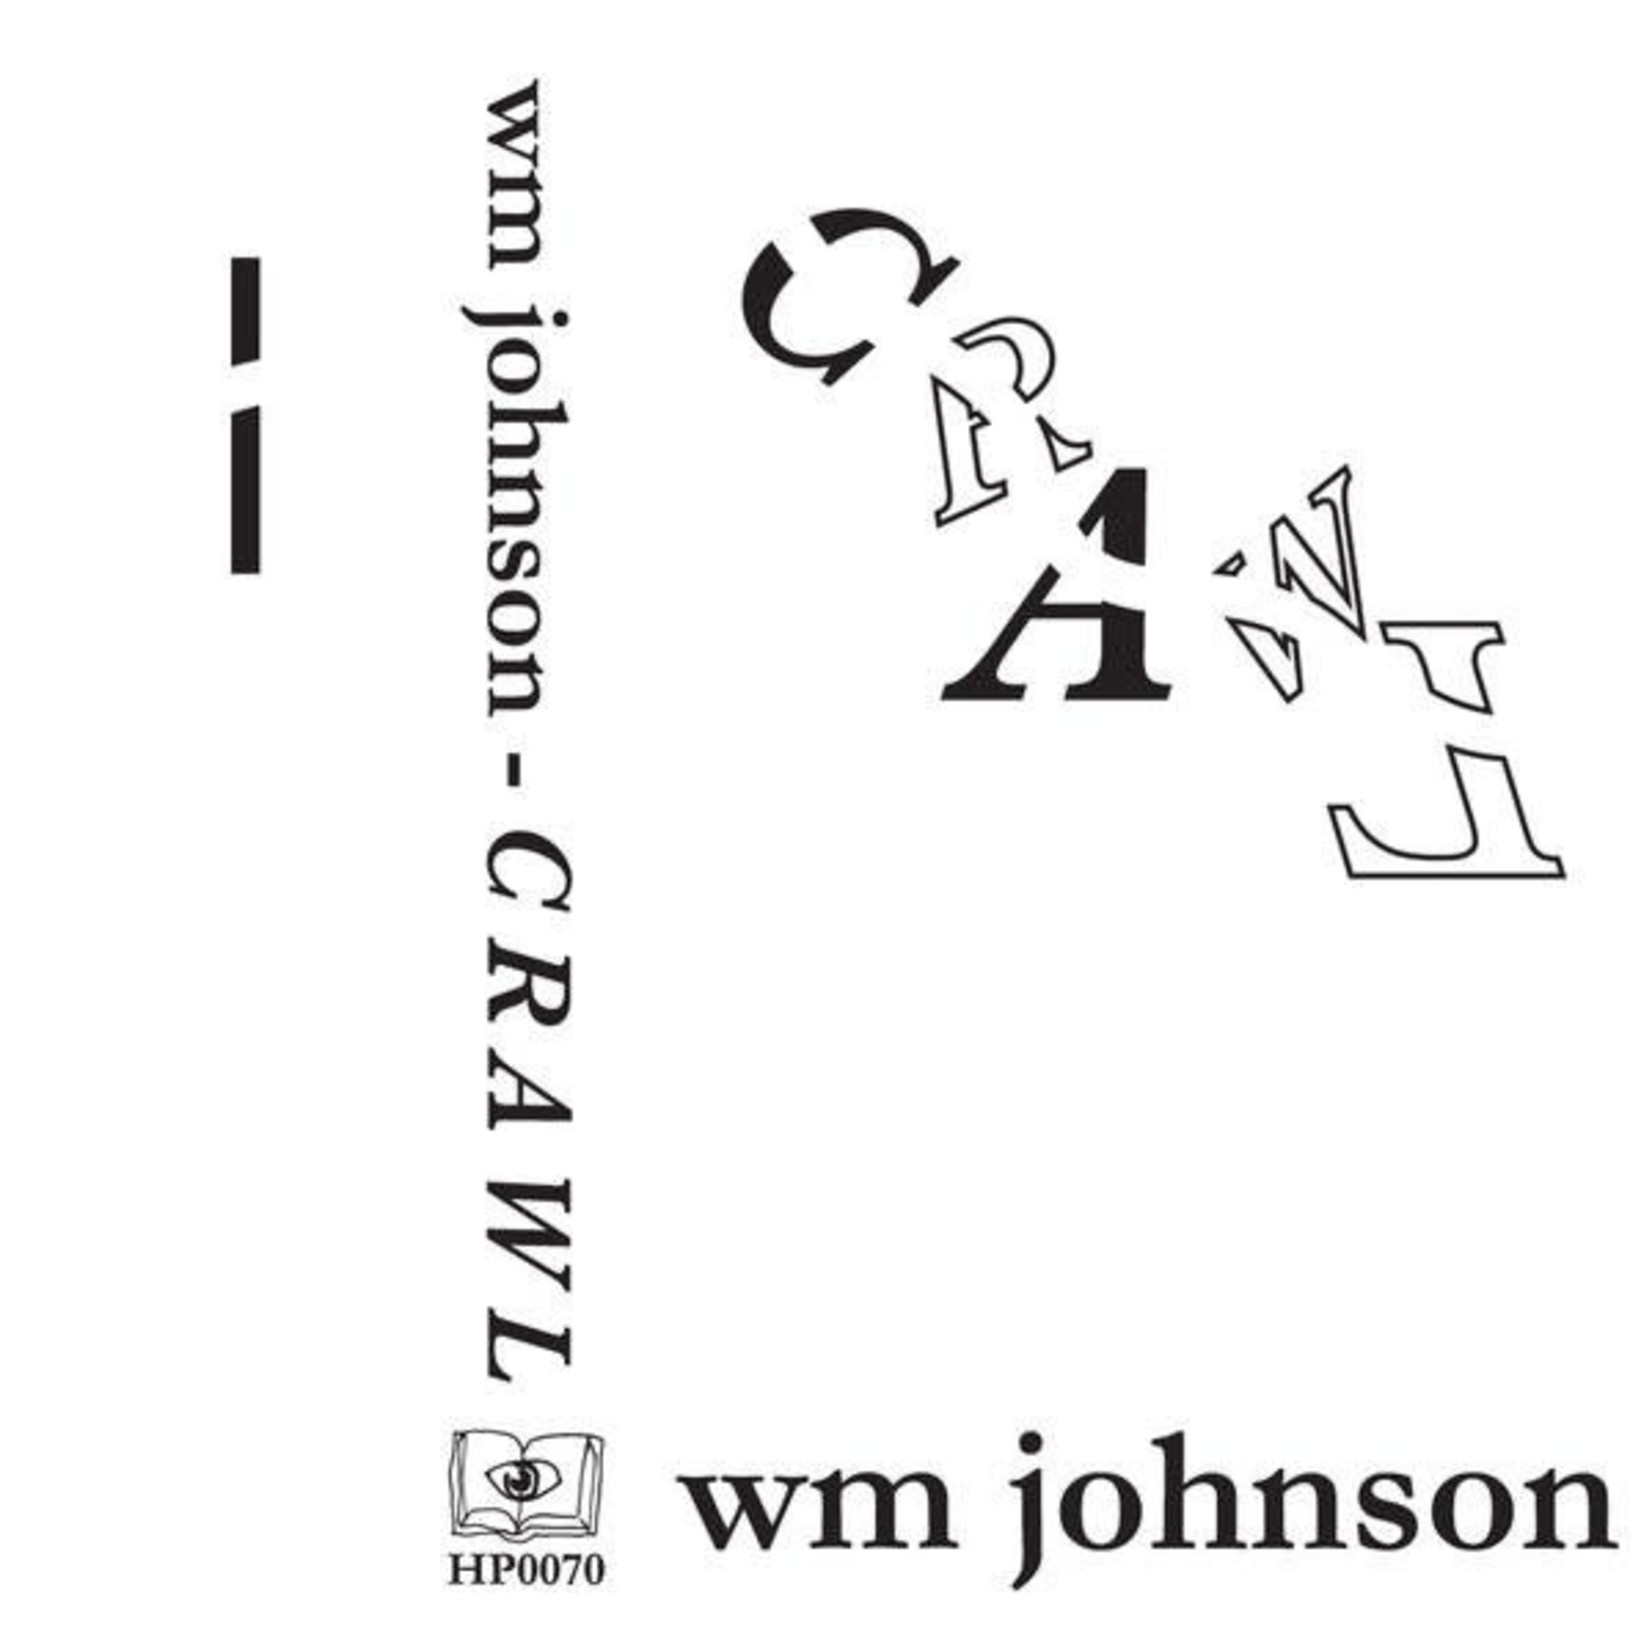 Wm Johnson - Crawl (Tape)